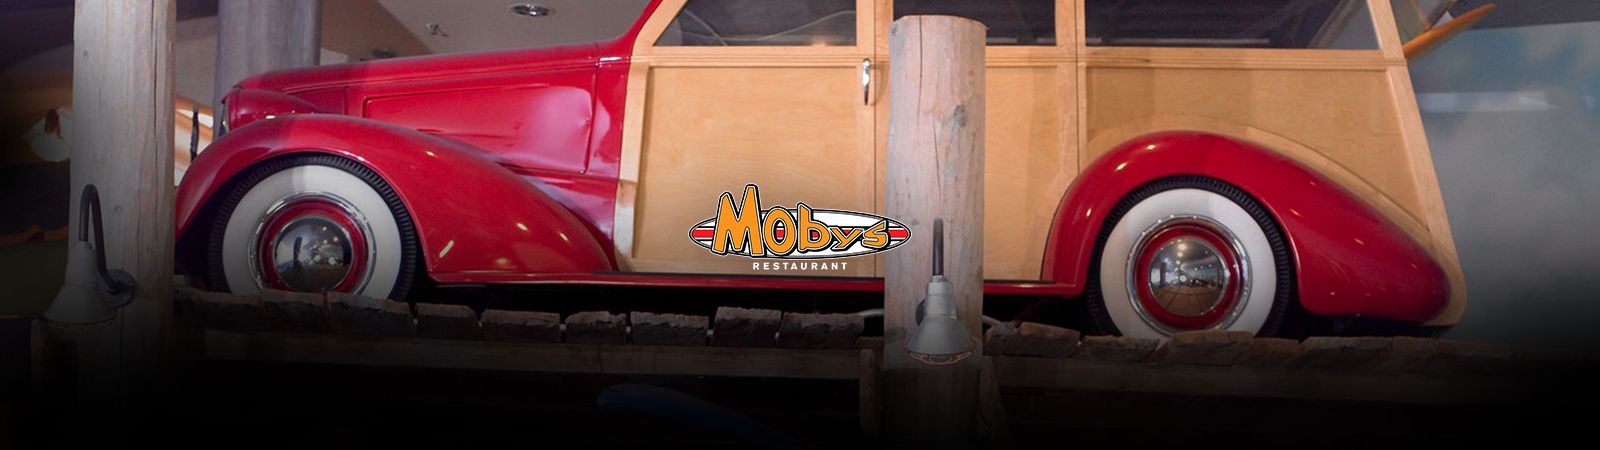 Mobys Diner in Tucson at Casino Del Sol